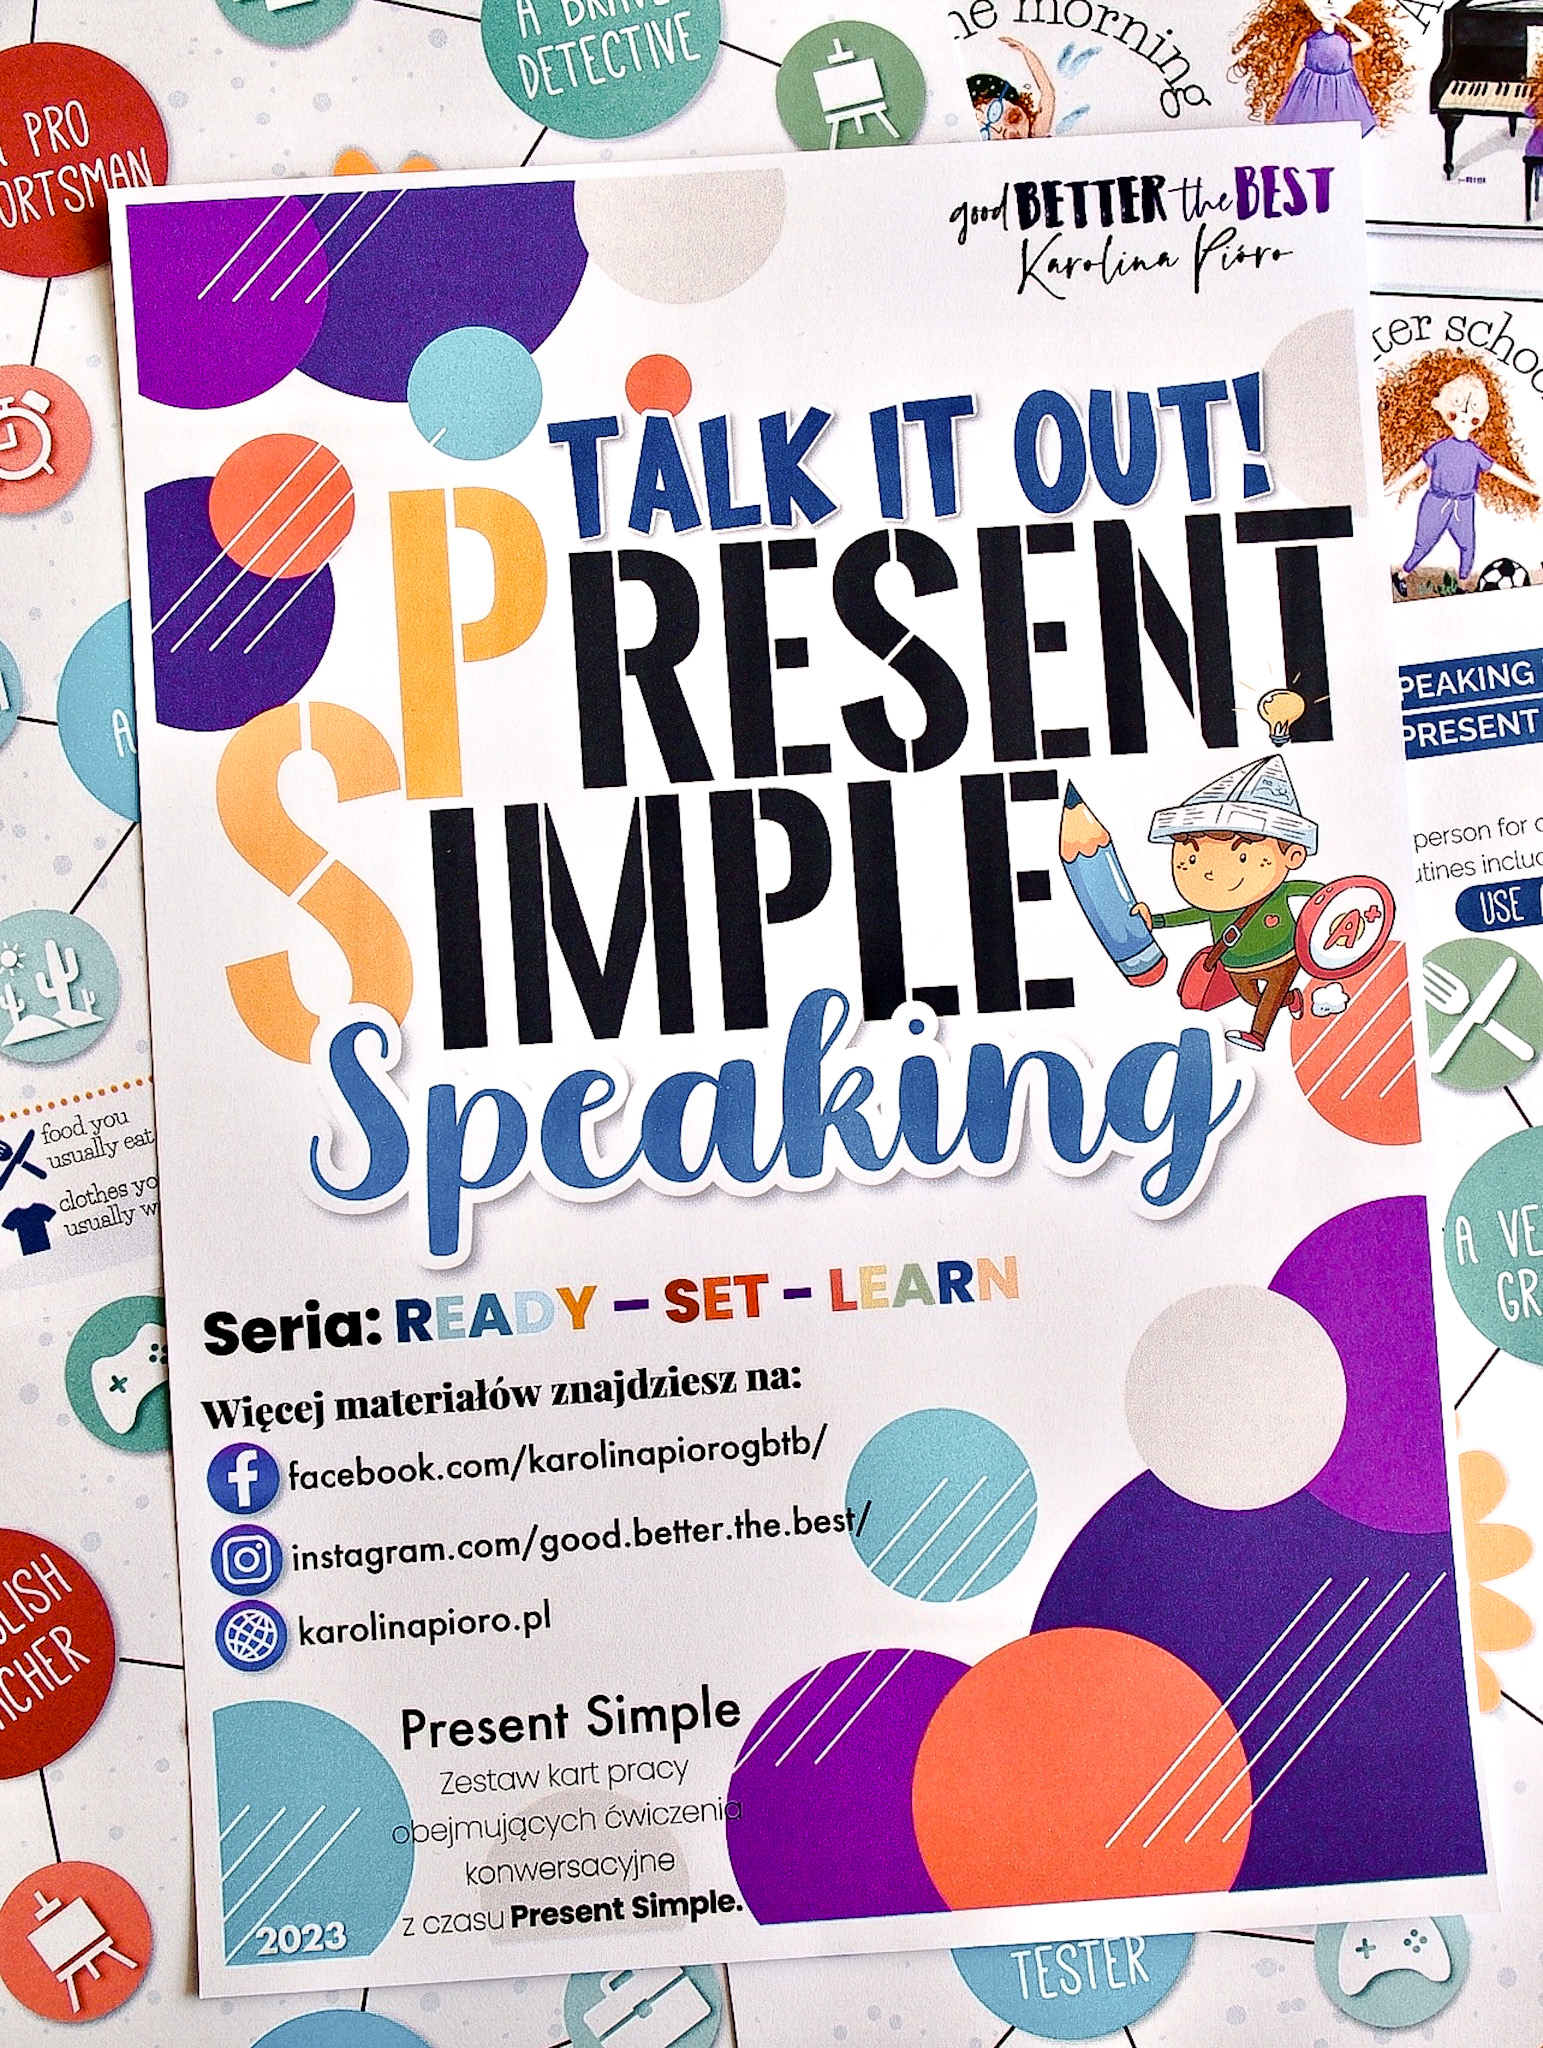 READY-SET-LEARN: PRESENT SIMPLE SPEAKING